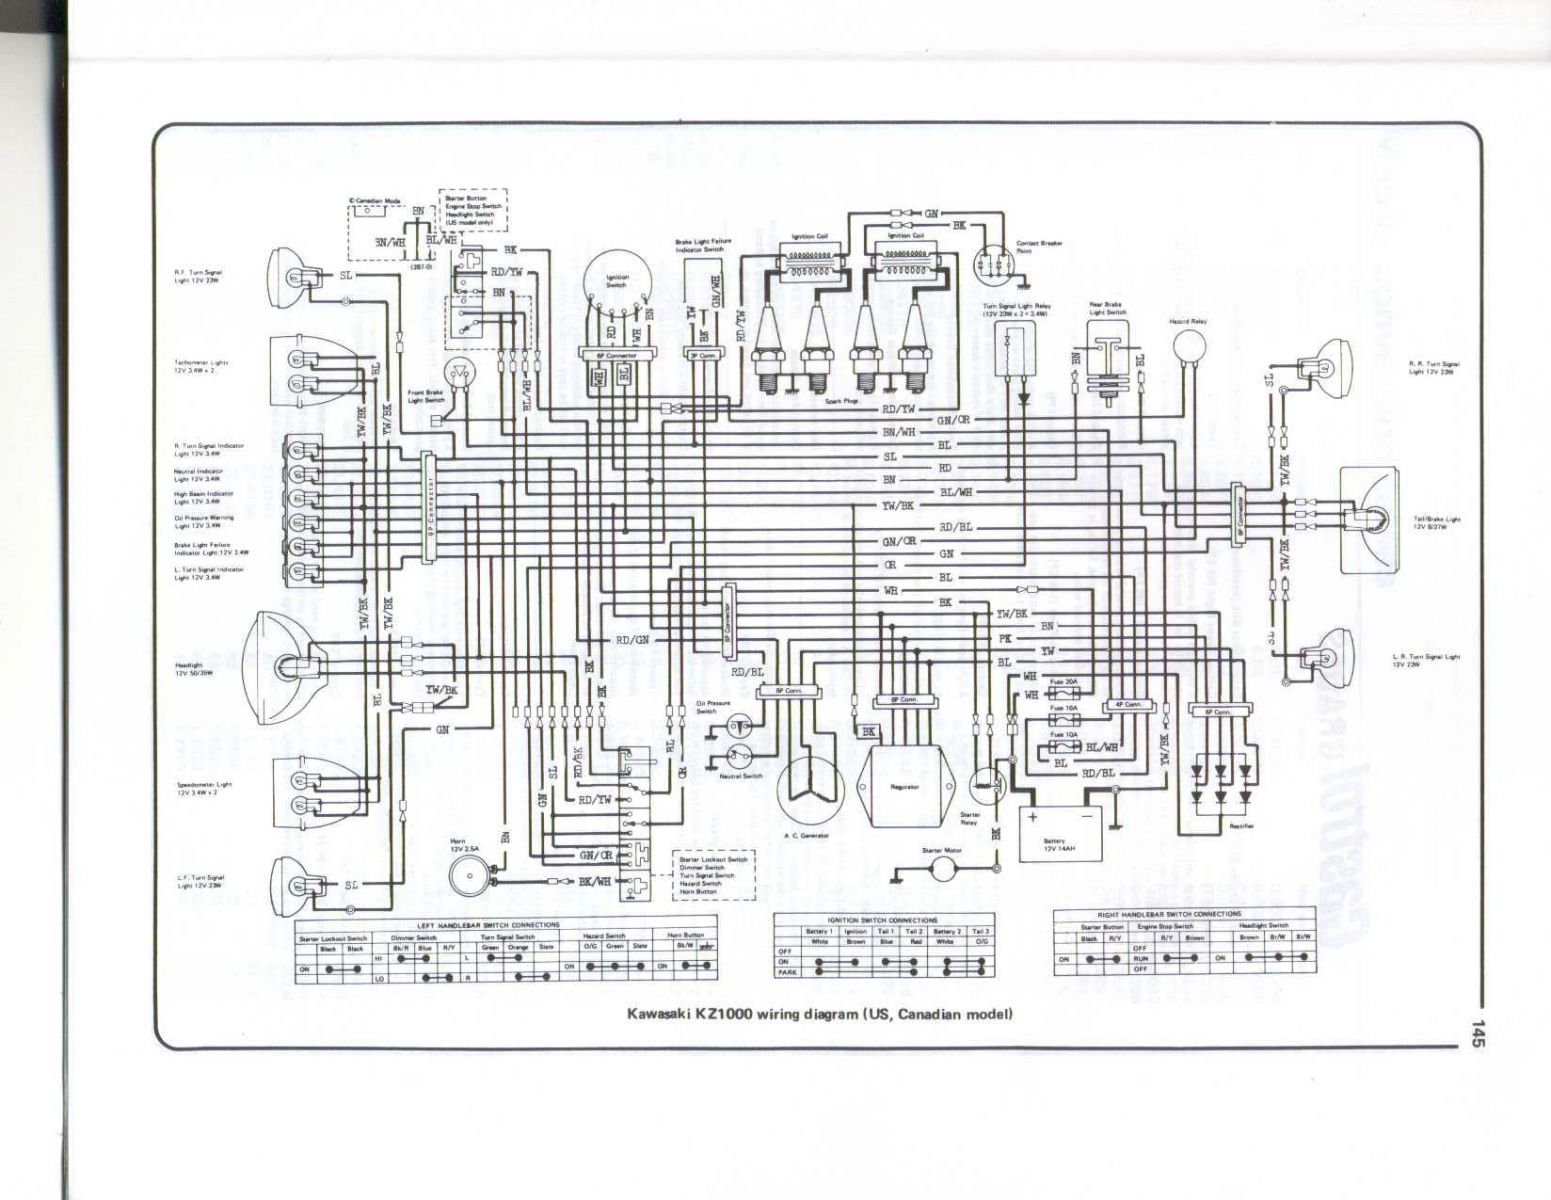 [DIAGRAM] Kawasaki Kz1100 Wiring Diagram FULL Version HD Quality Wiring